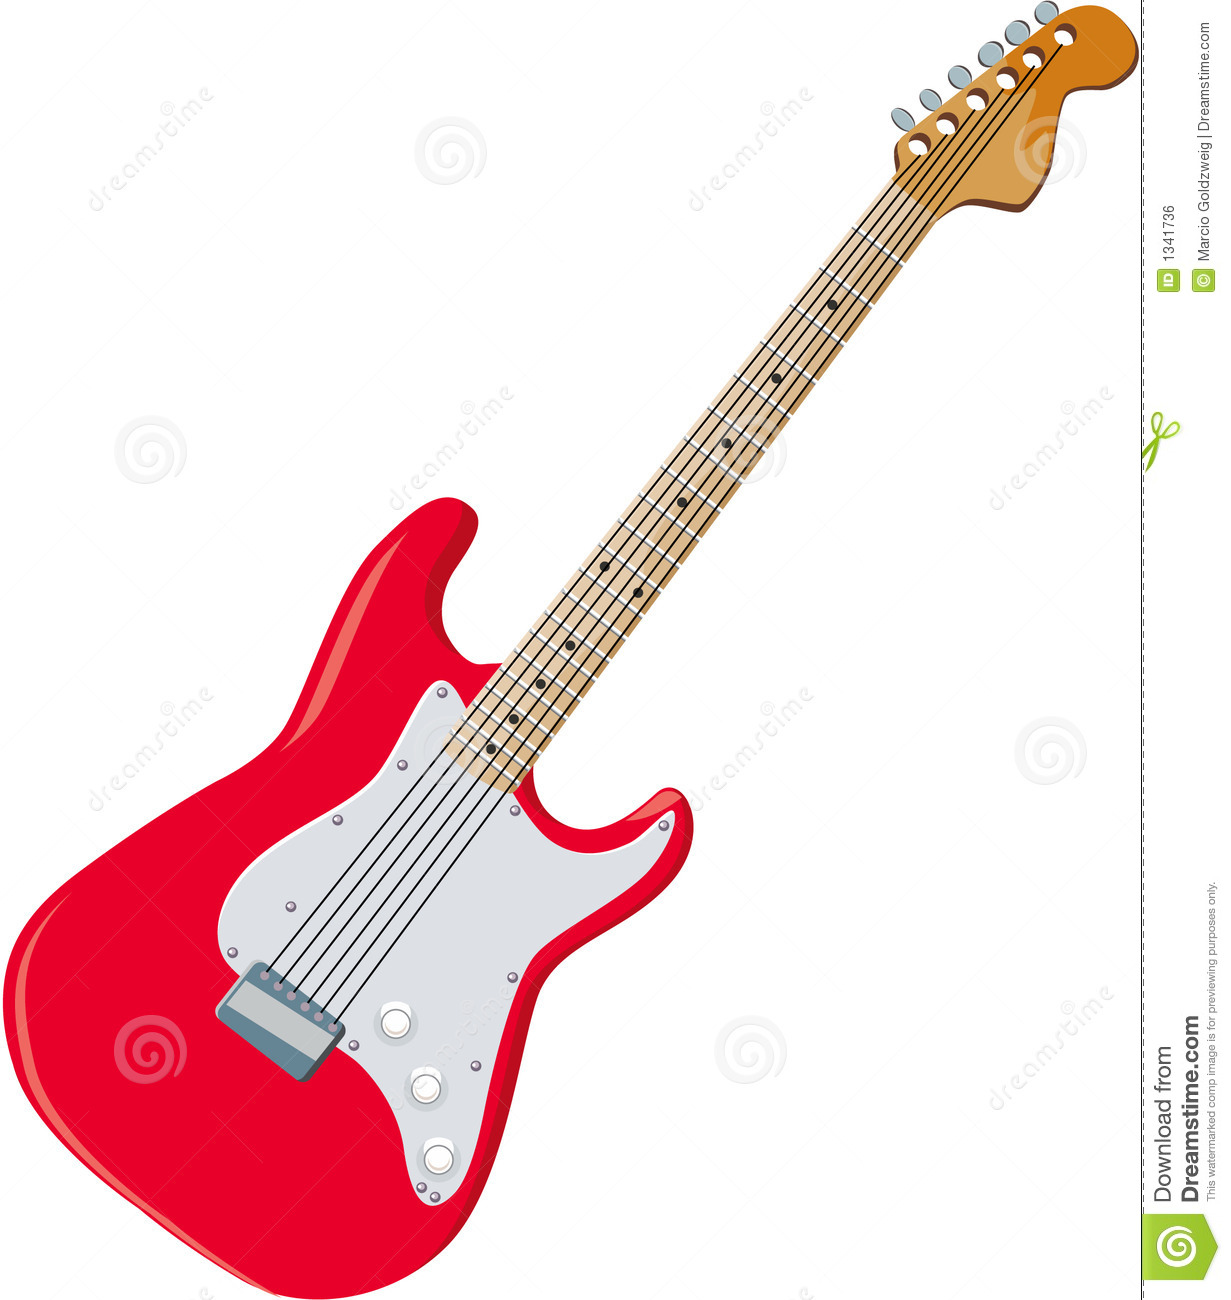 Guitar 01 Royalty Free Stock Image   Image  1341736